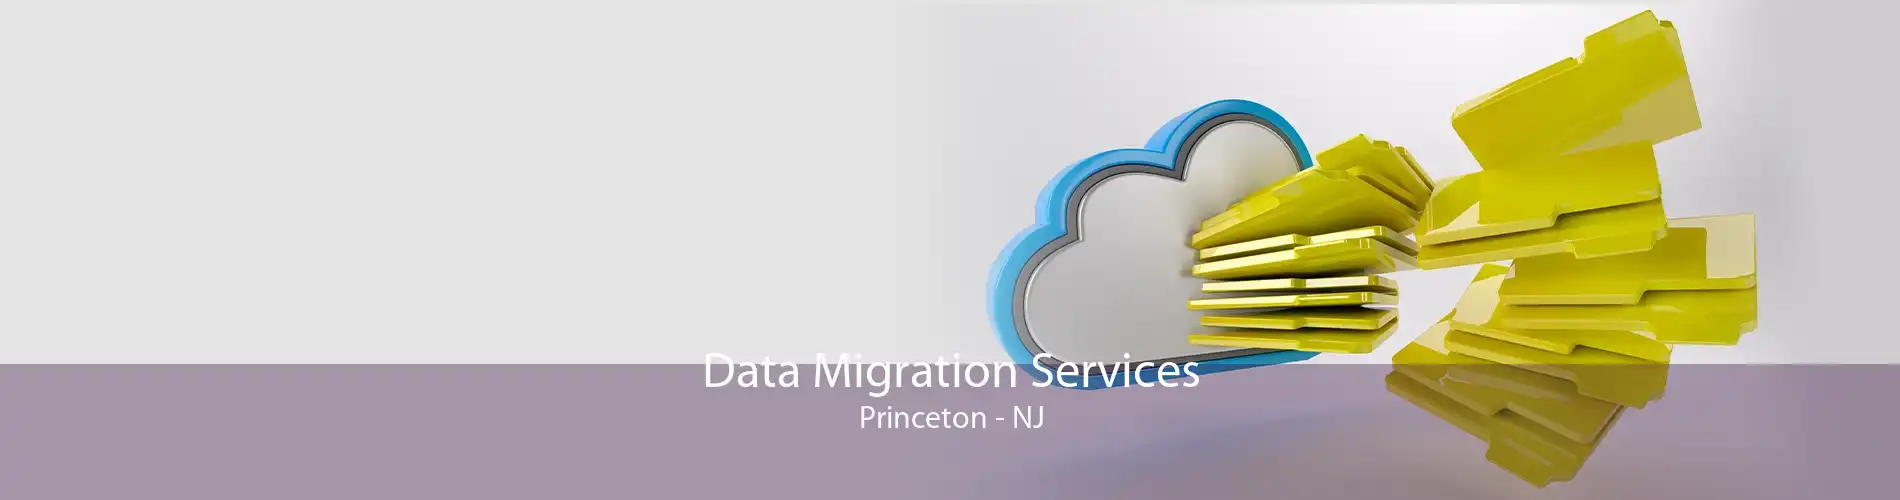 Data Migration Services Princeton - NJ